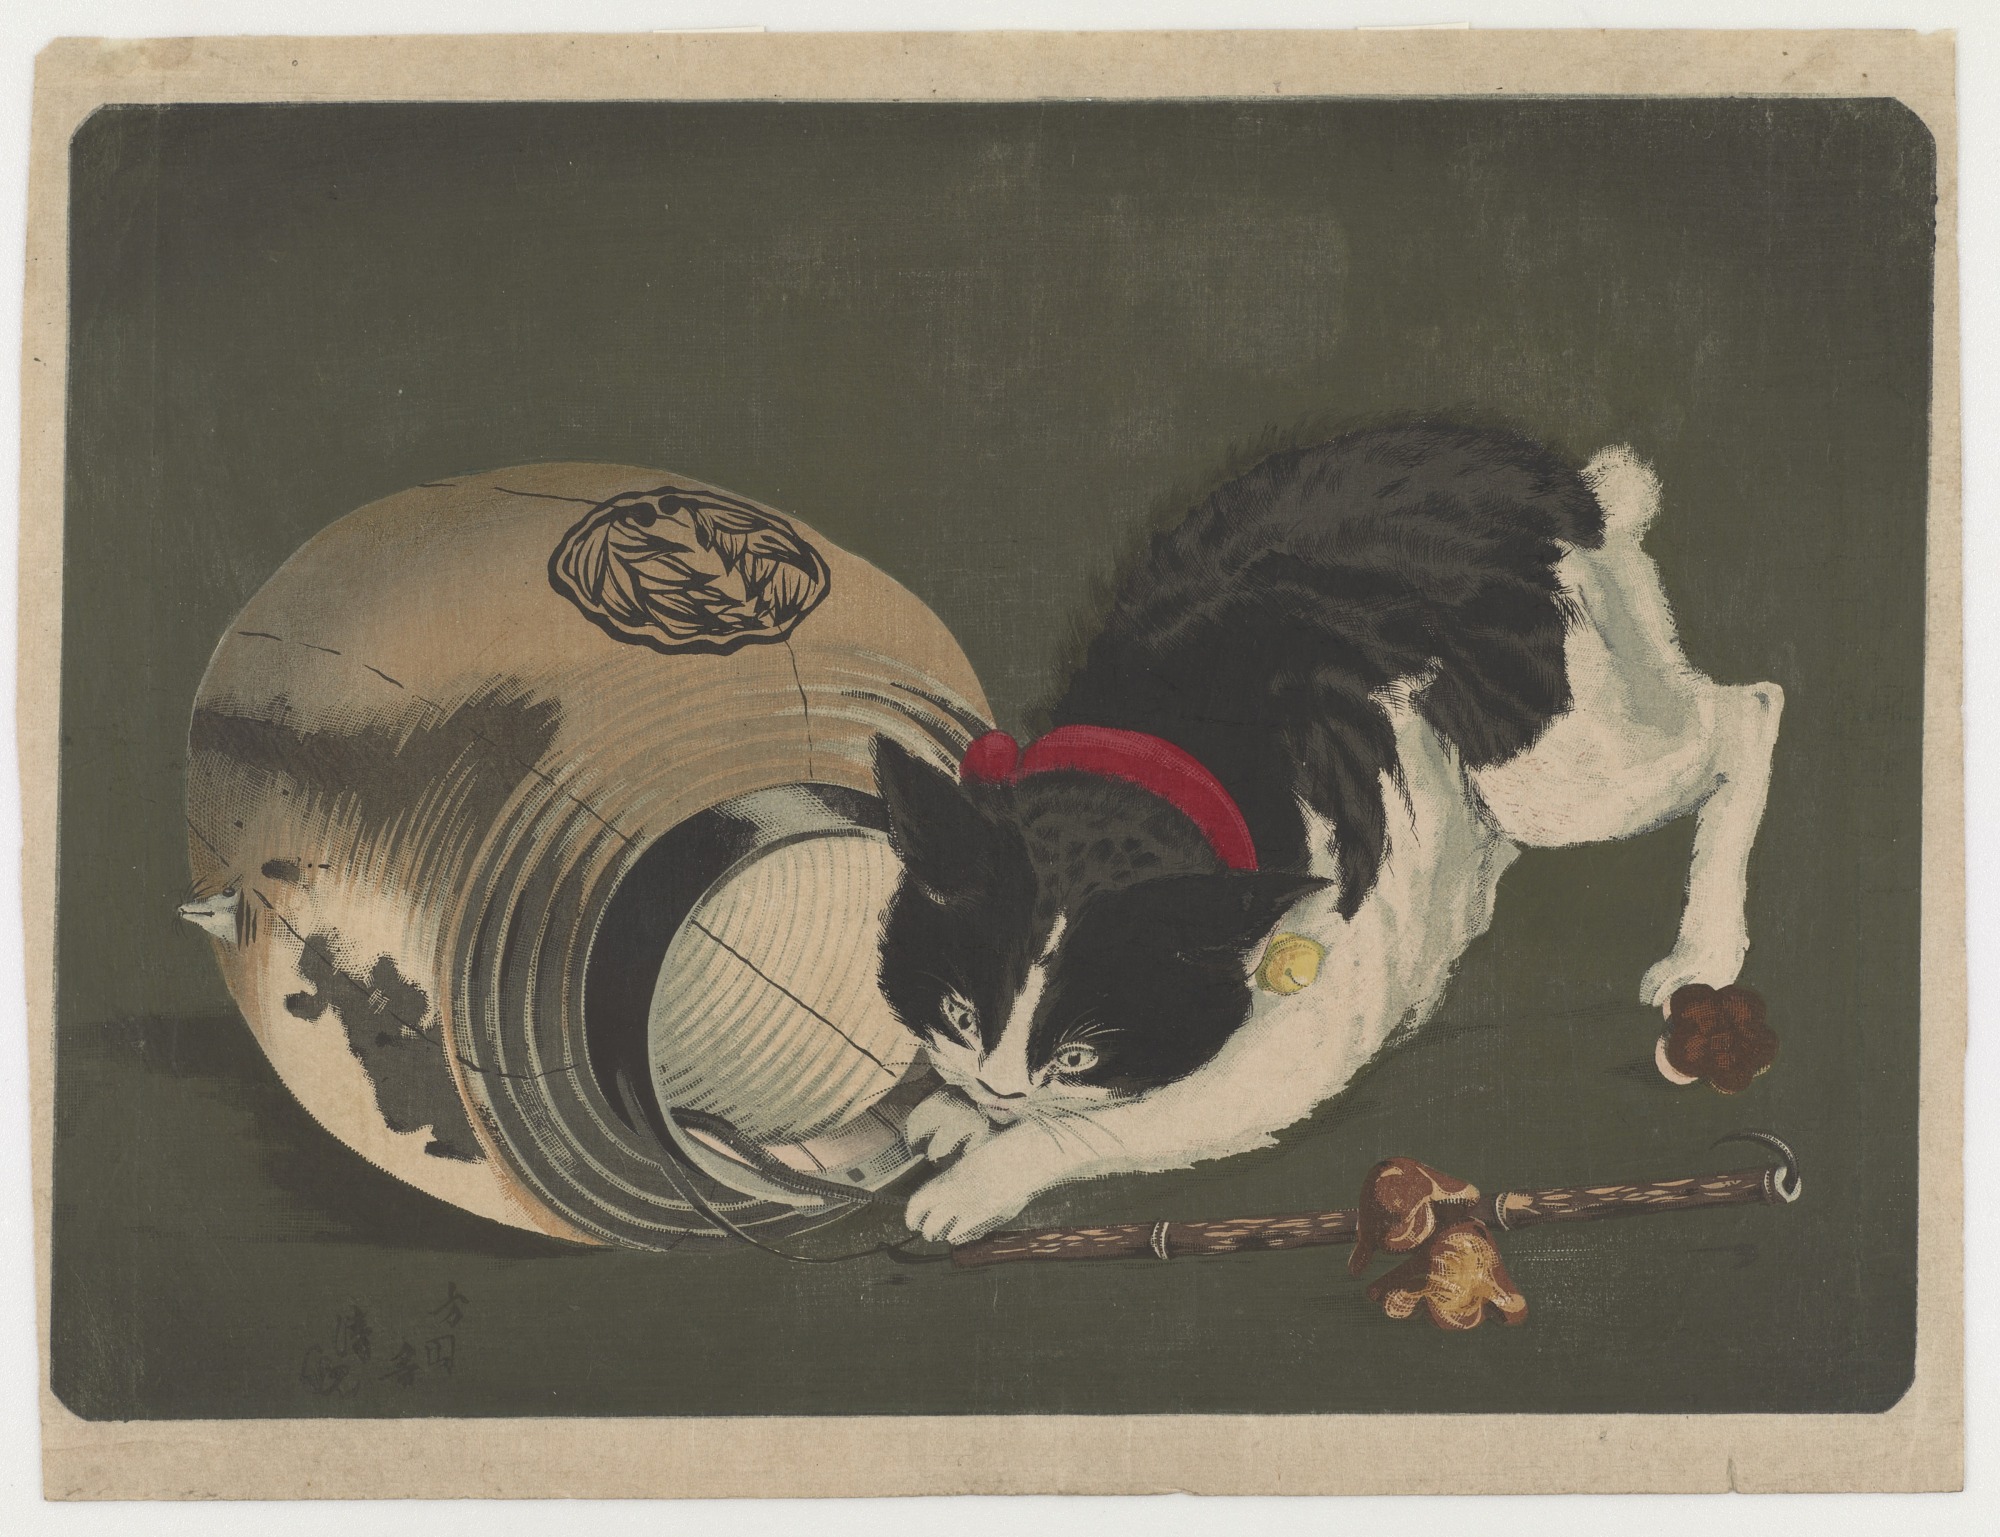 Cat with a Lantern by Kobayashi Kiyochika - 1877-81 - 30.7 x 43.5 cm private collection